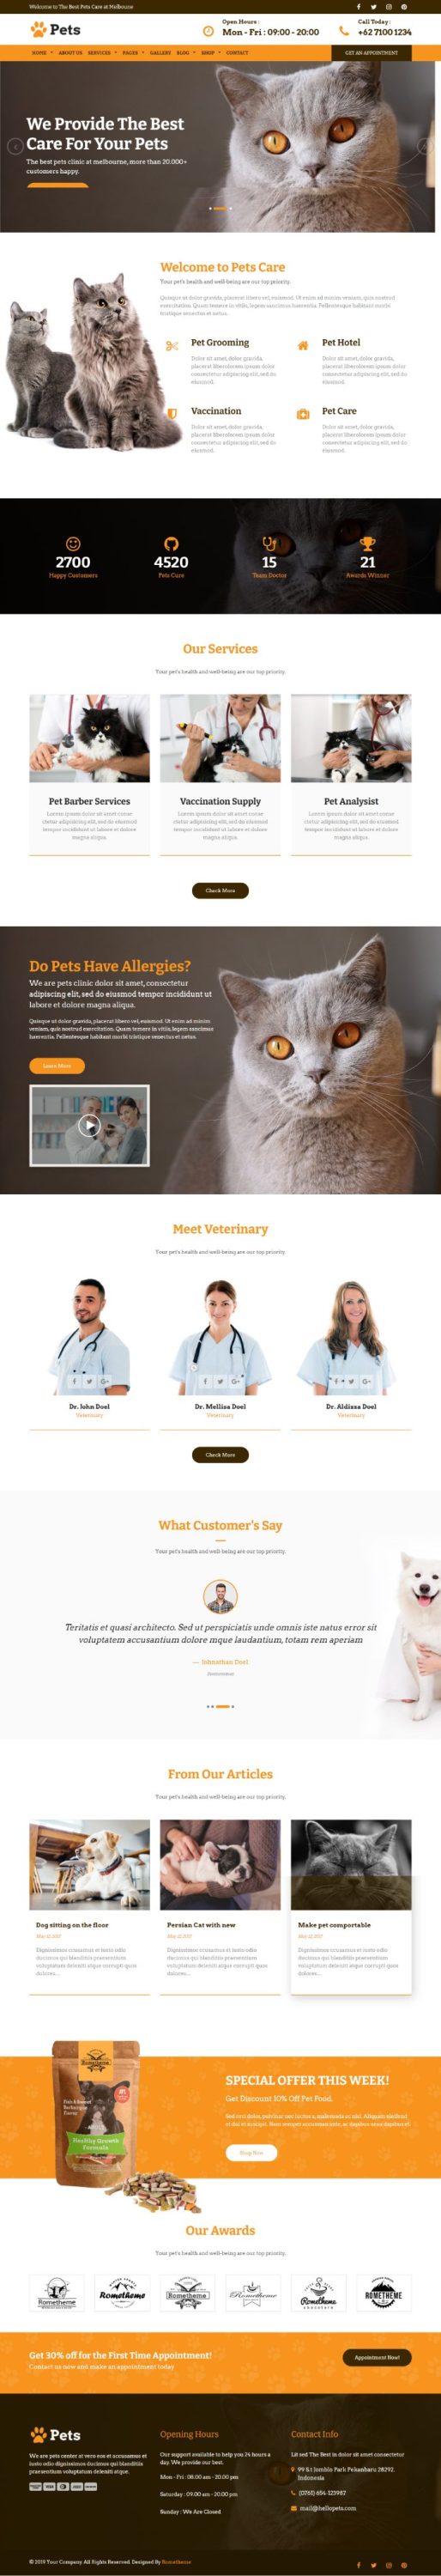 Mẫu website chăm sóc thú cưng - Pet care 6